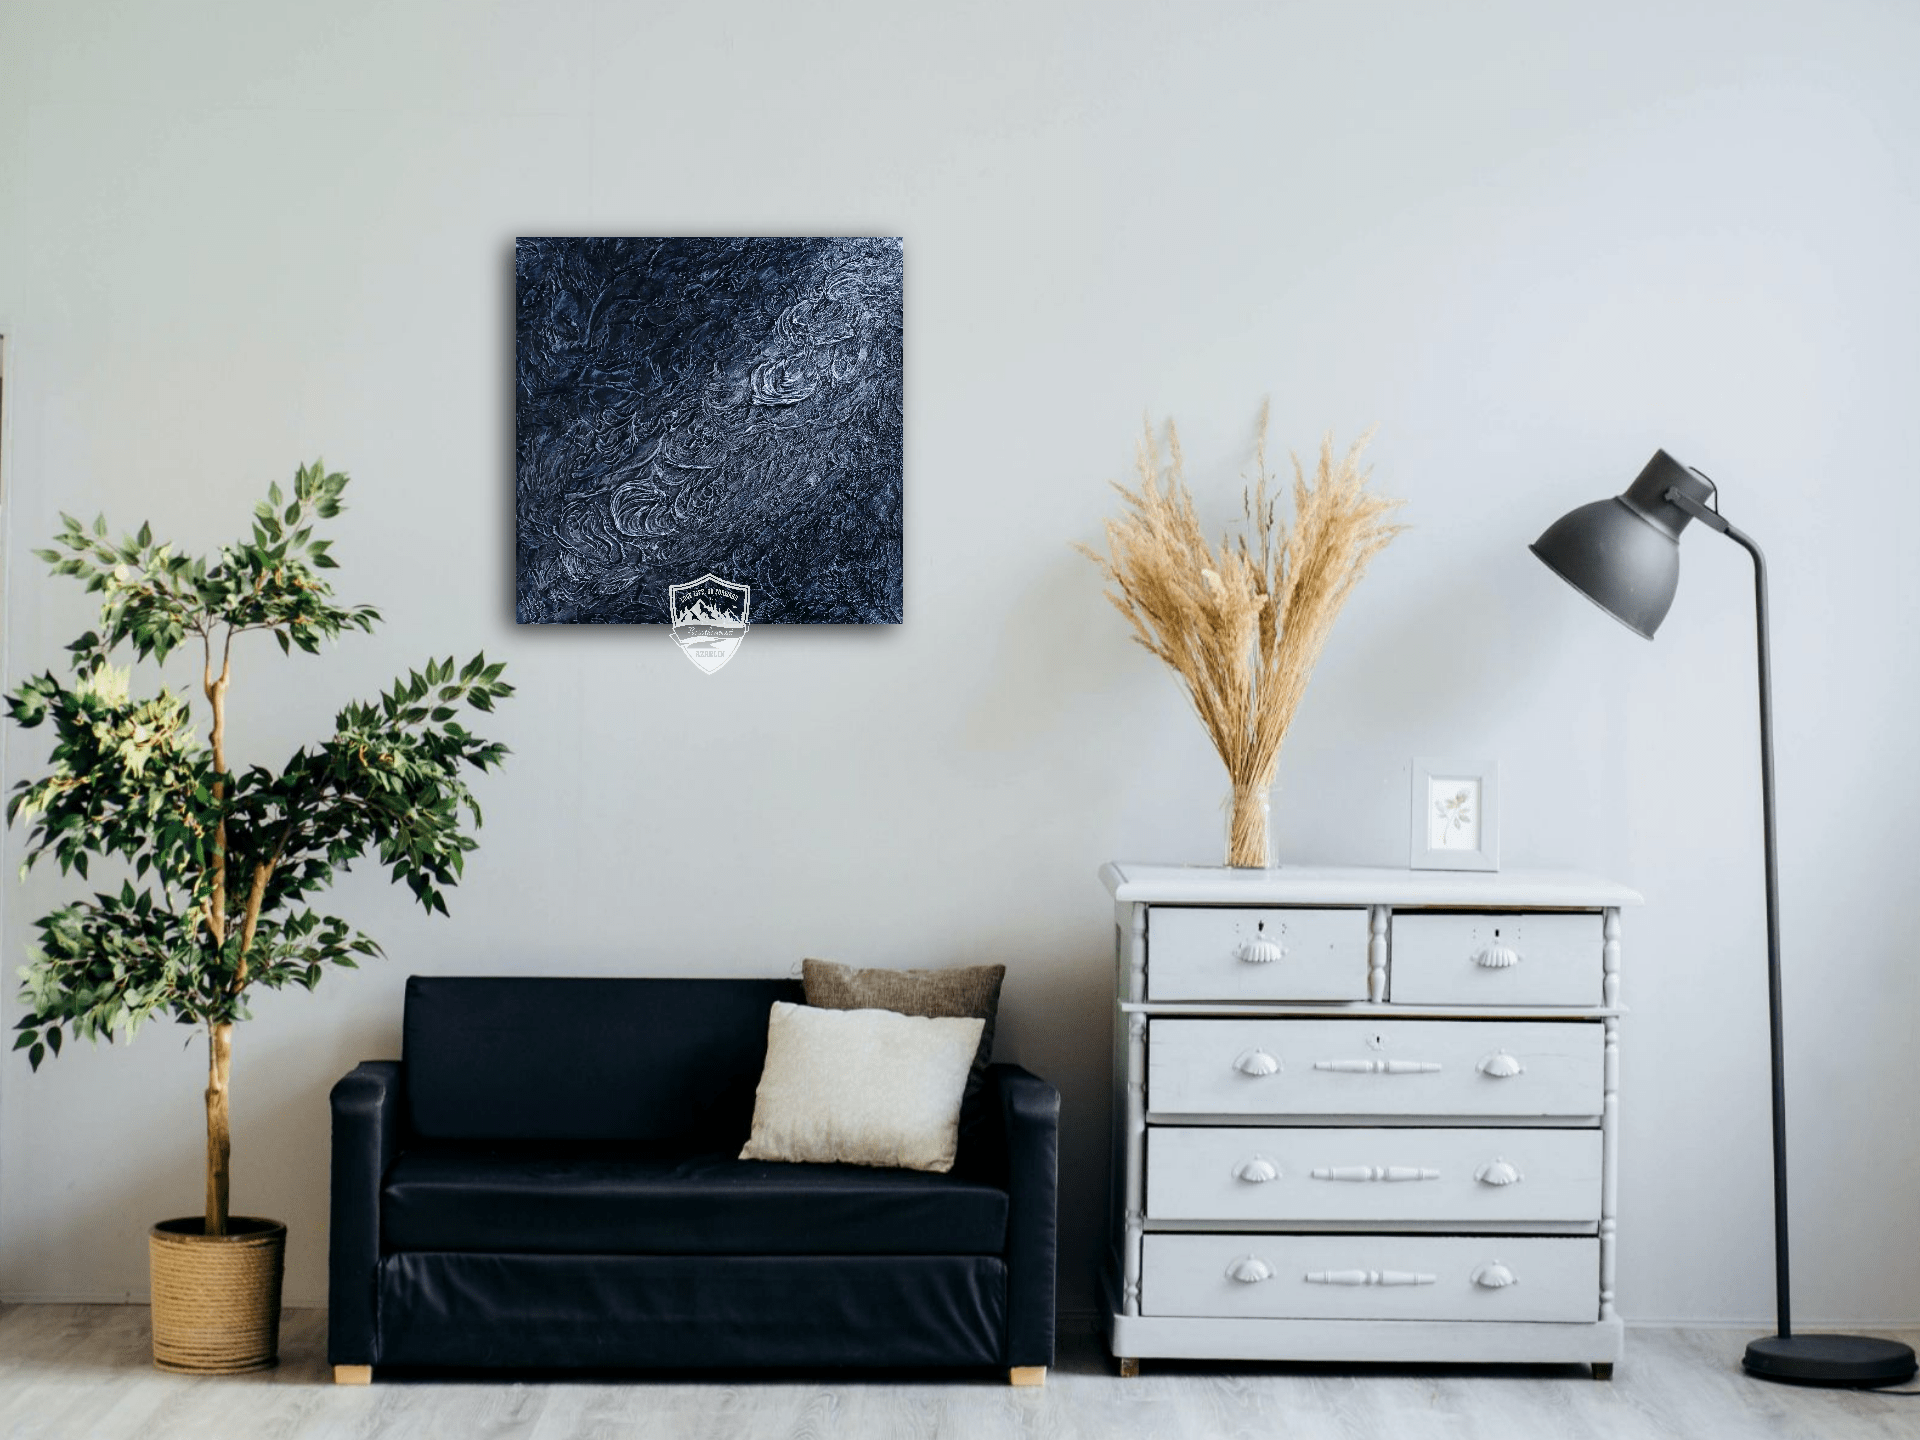 Черно-белый дизайн квартиры — нескучный интерьер